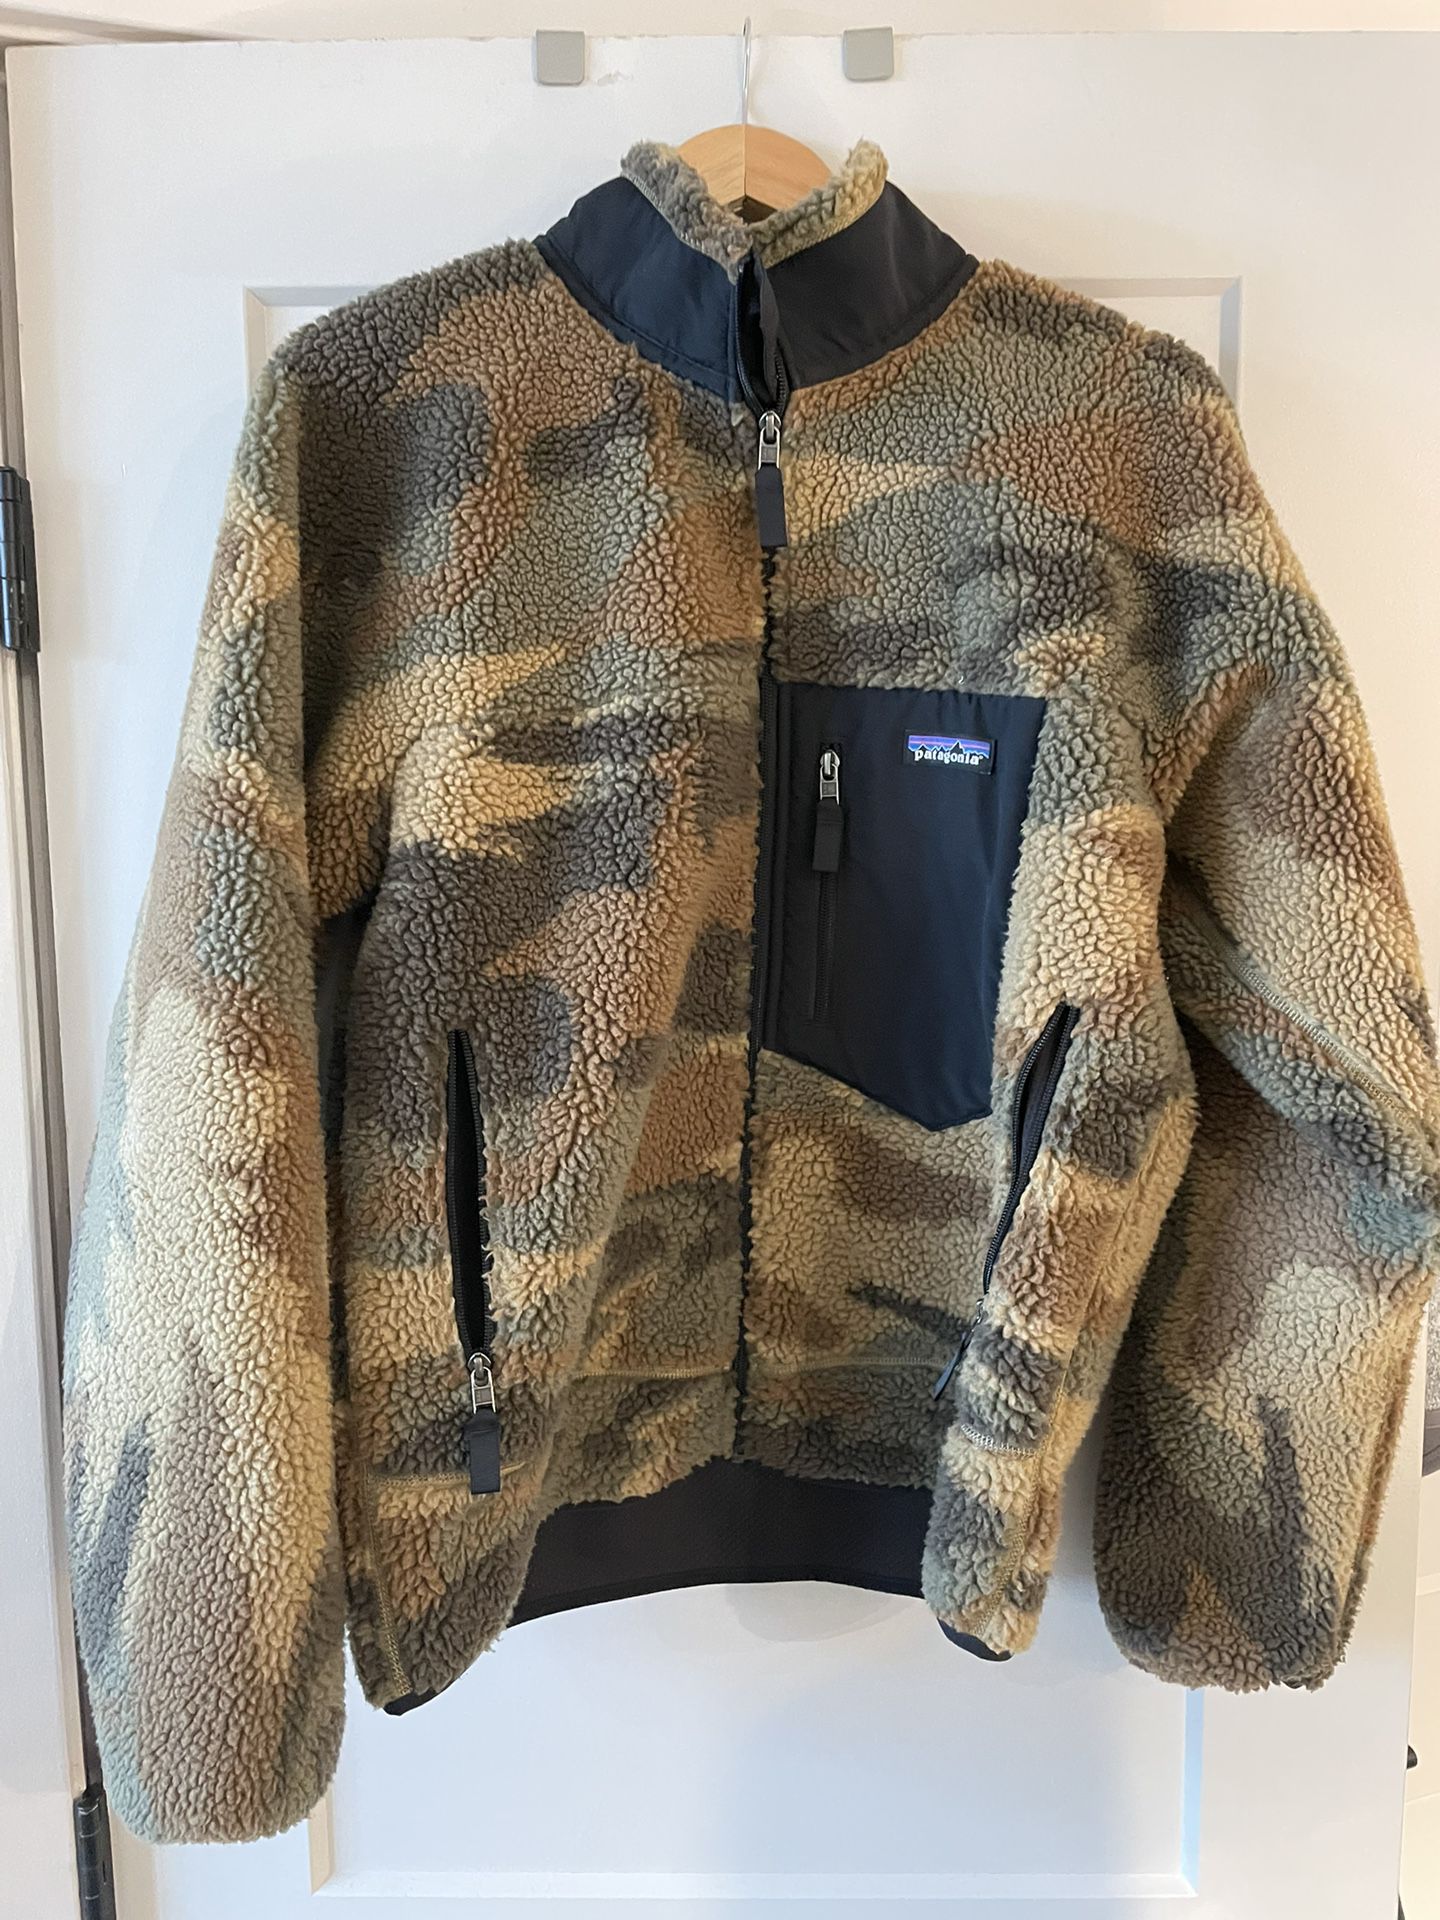 Patagonia Retro-X Fleece Jacket (Camouflage)